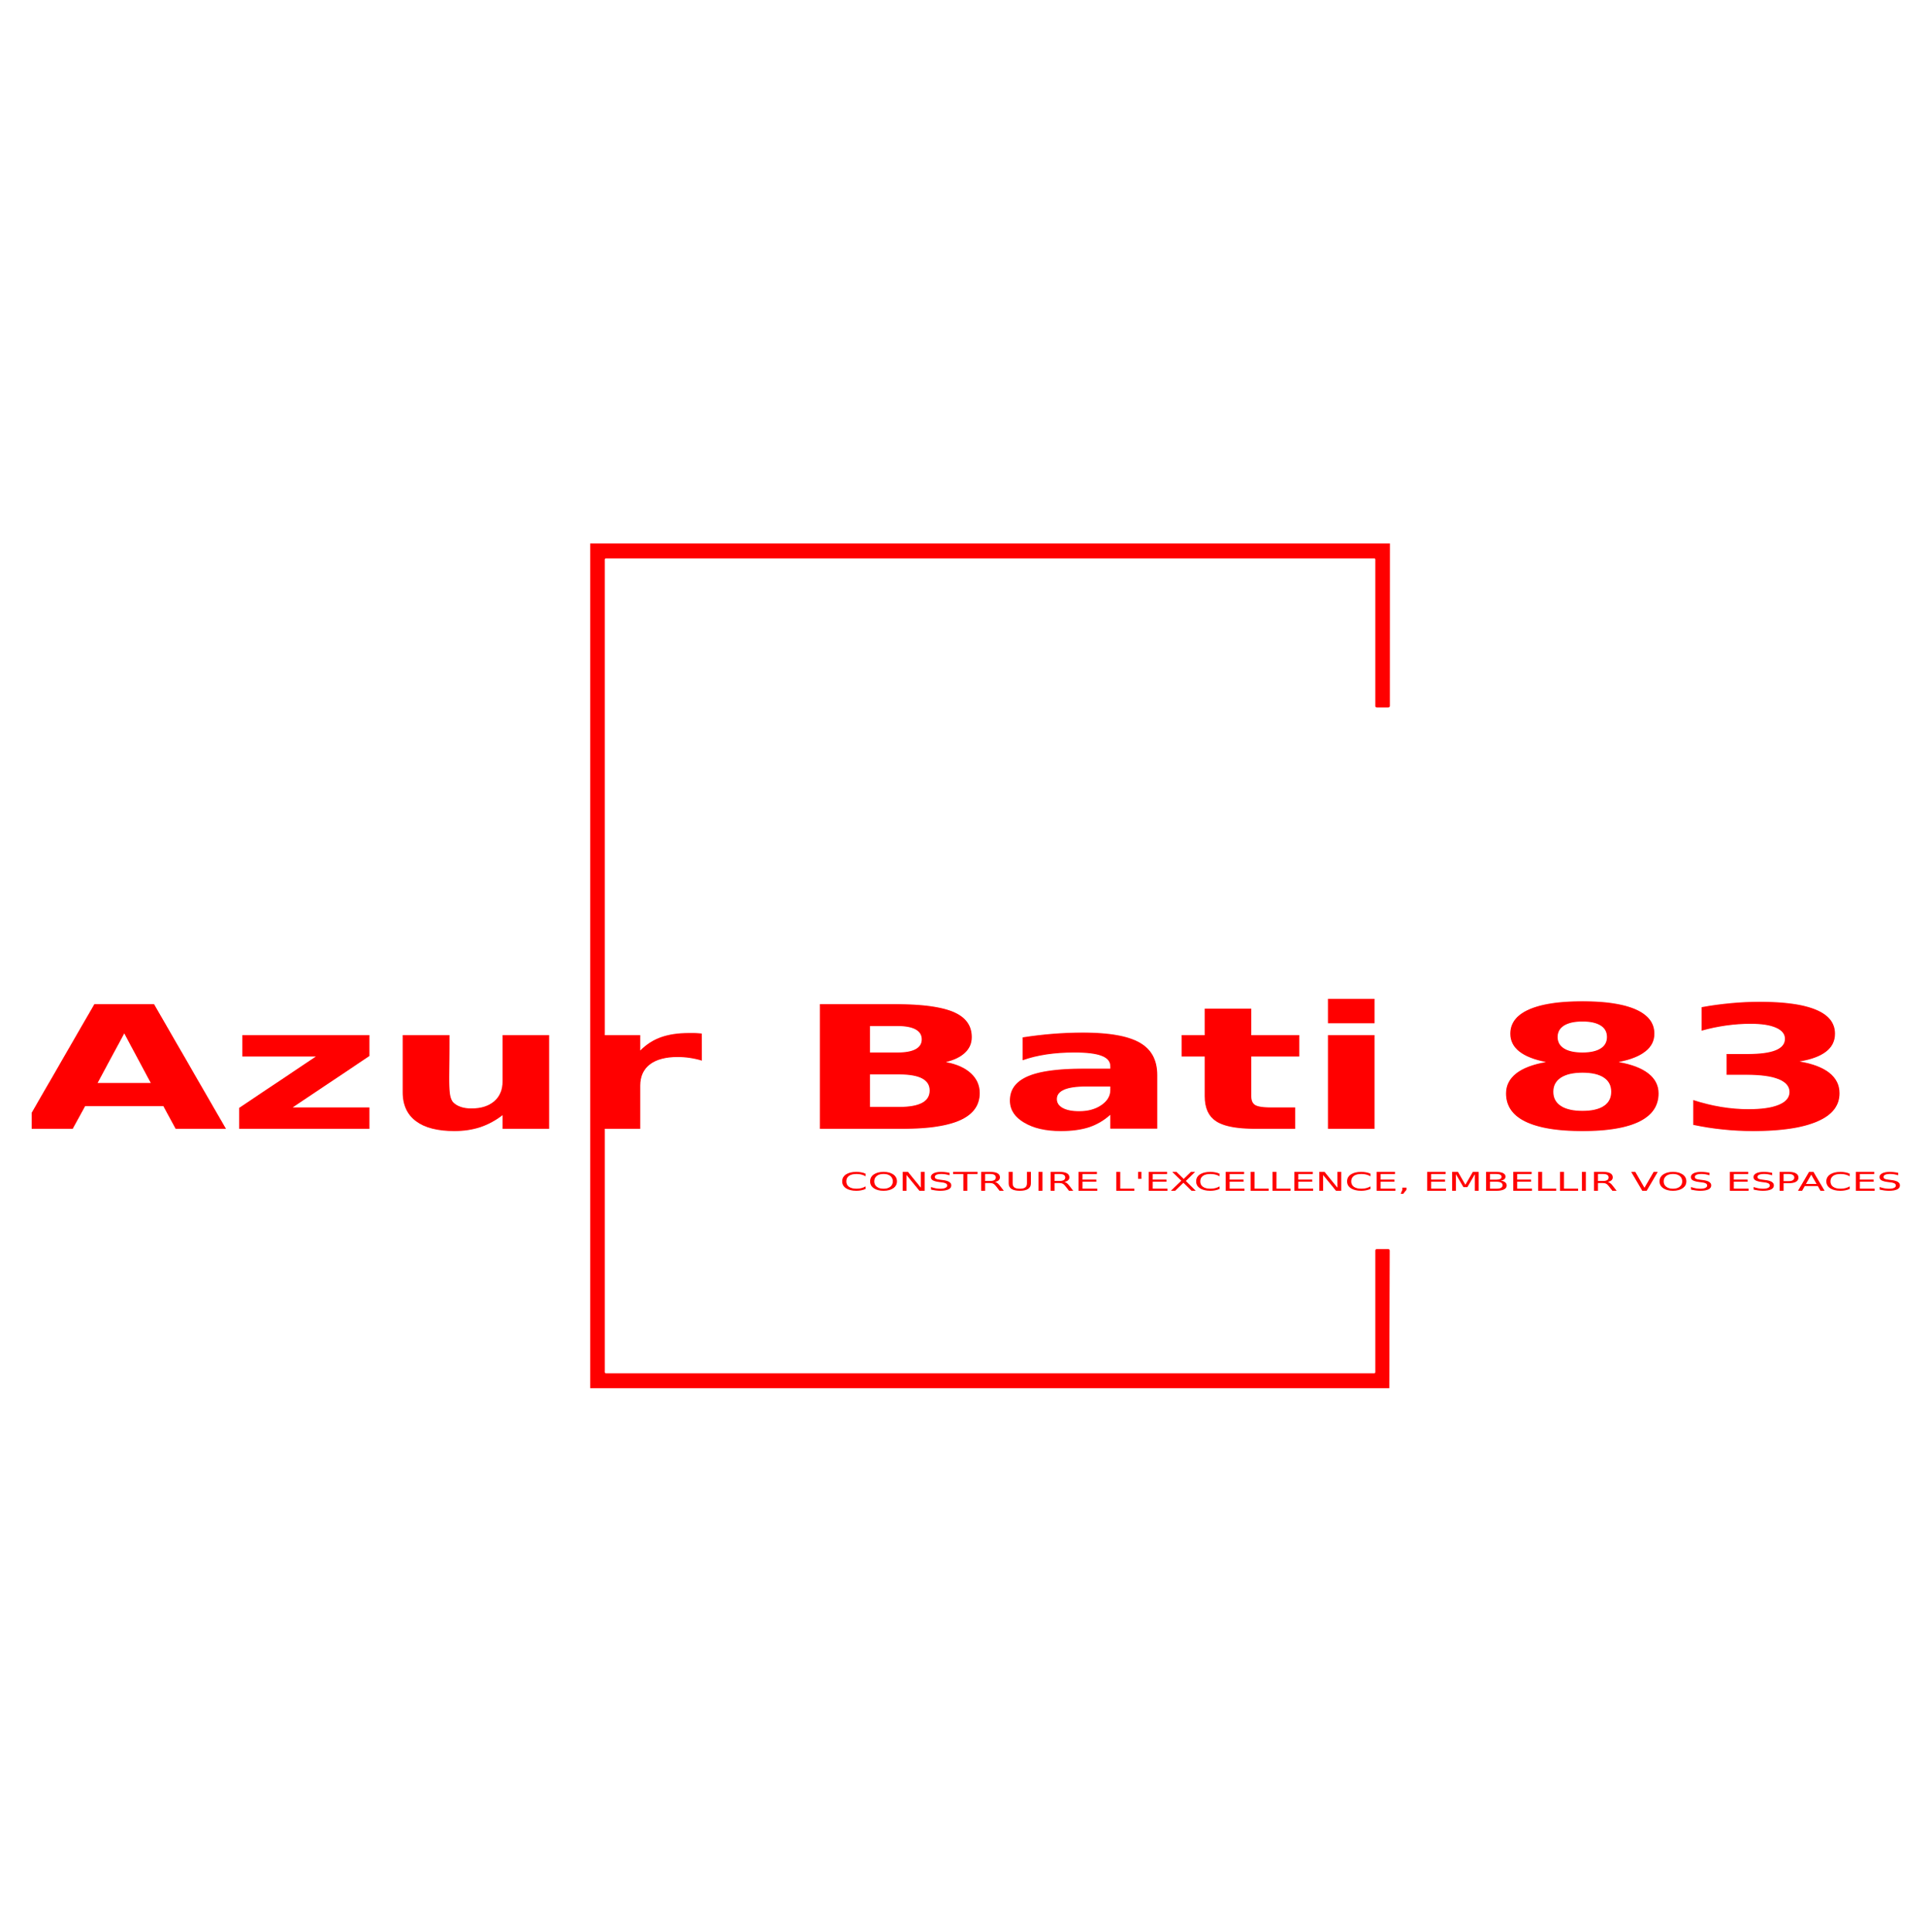 Azur Bati 83 2021 Logo  Transparent Photo